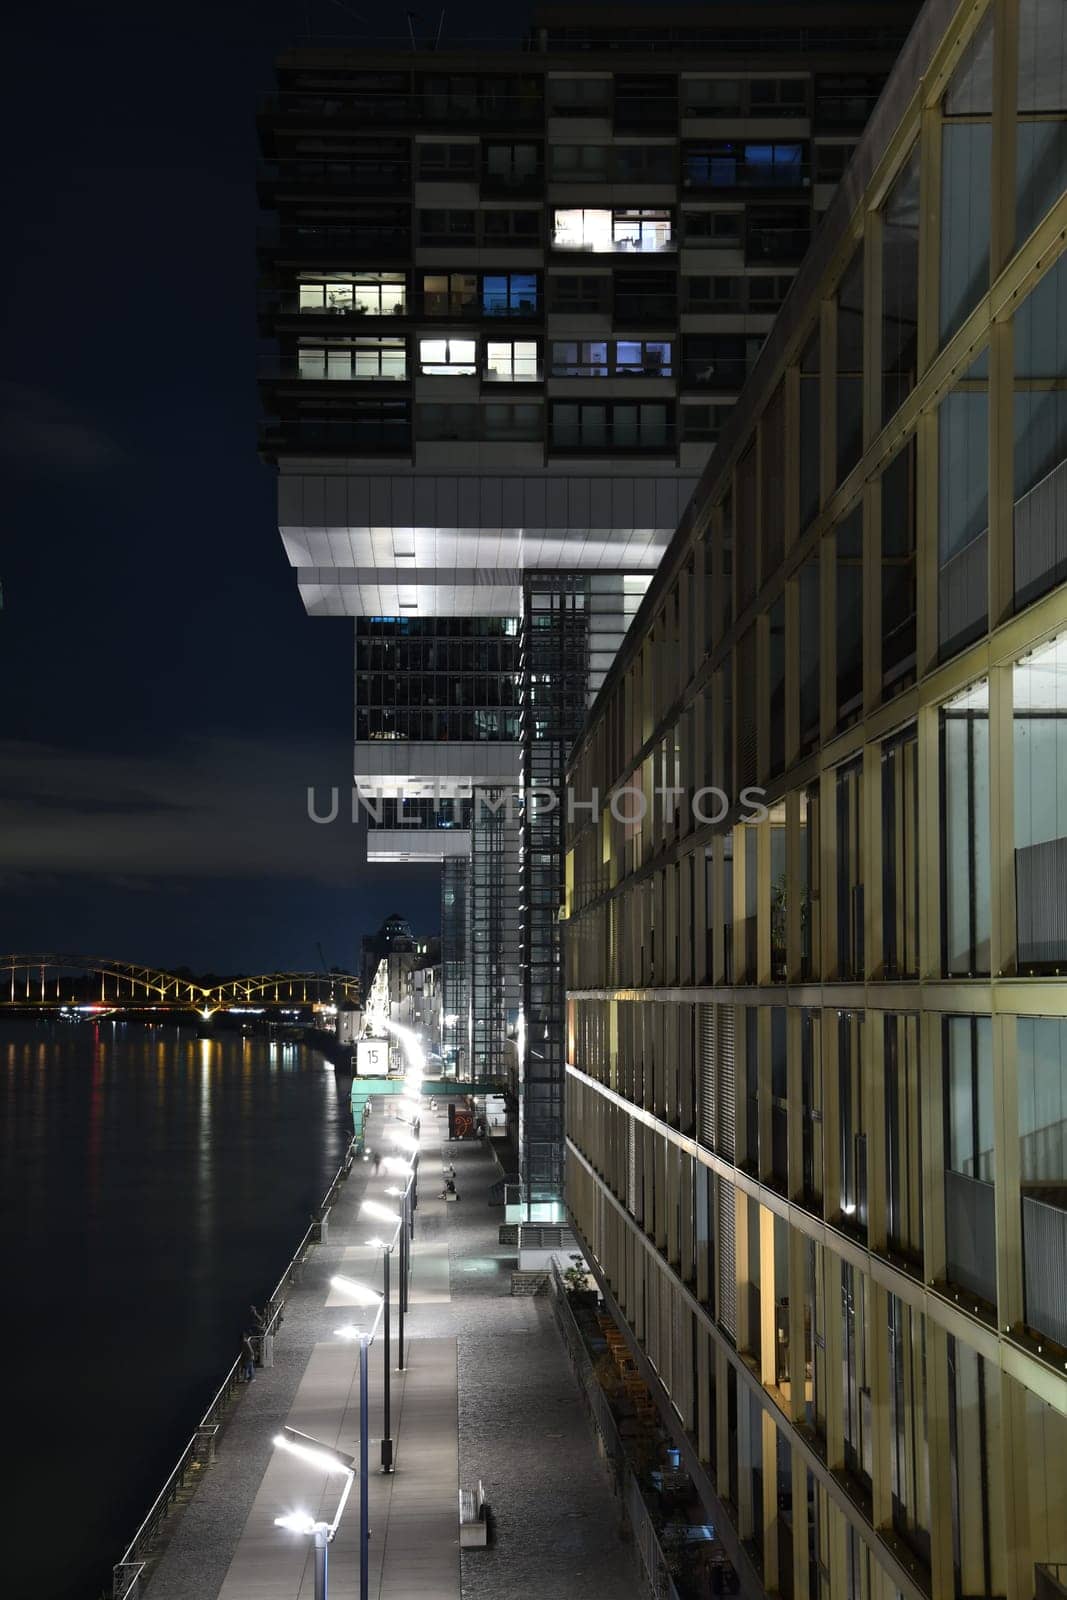 View of the illuminated promenade from crane house balcony in Germany at night